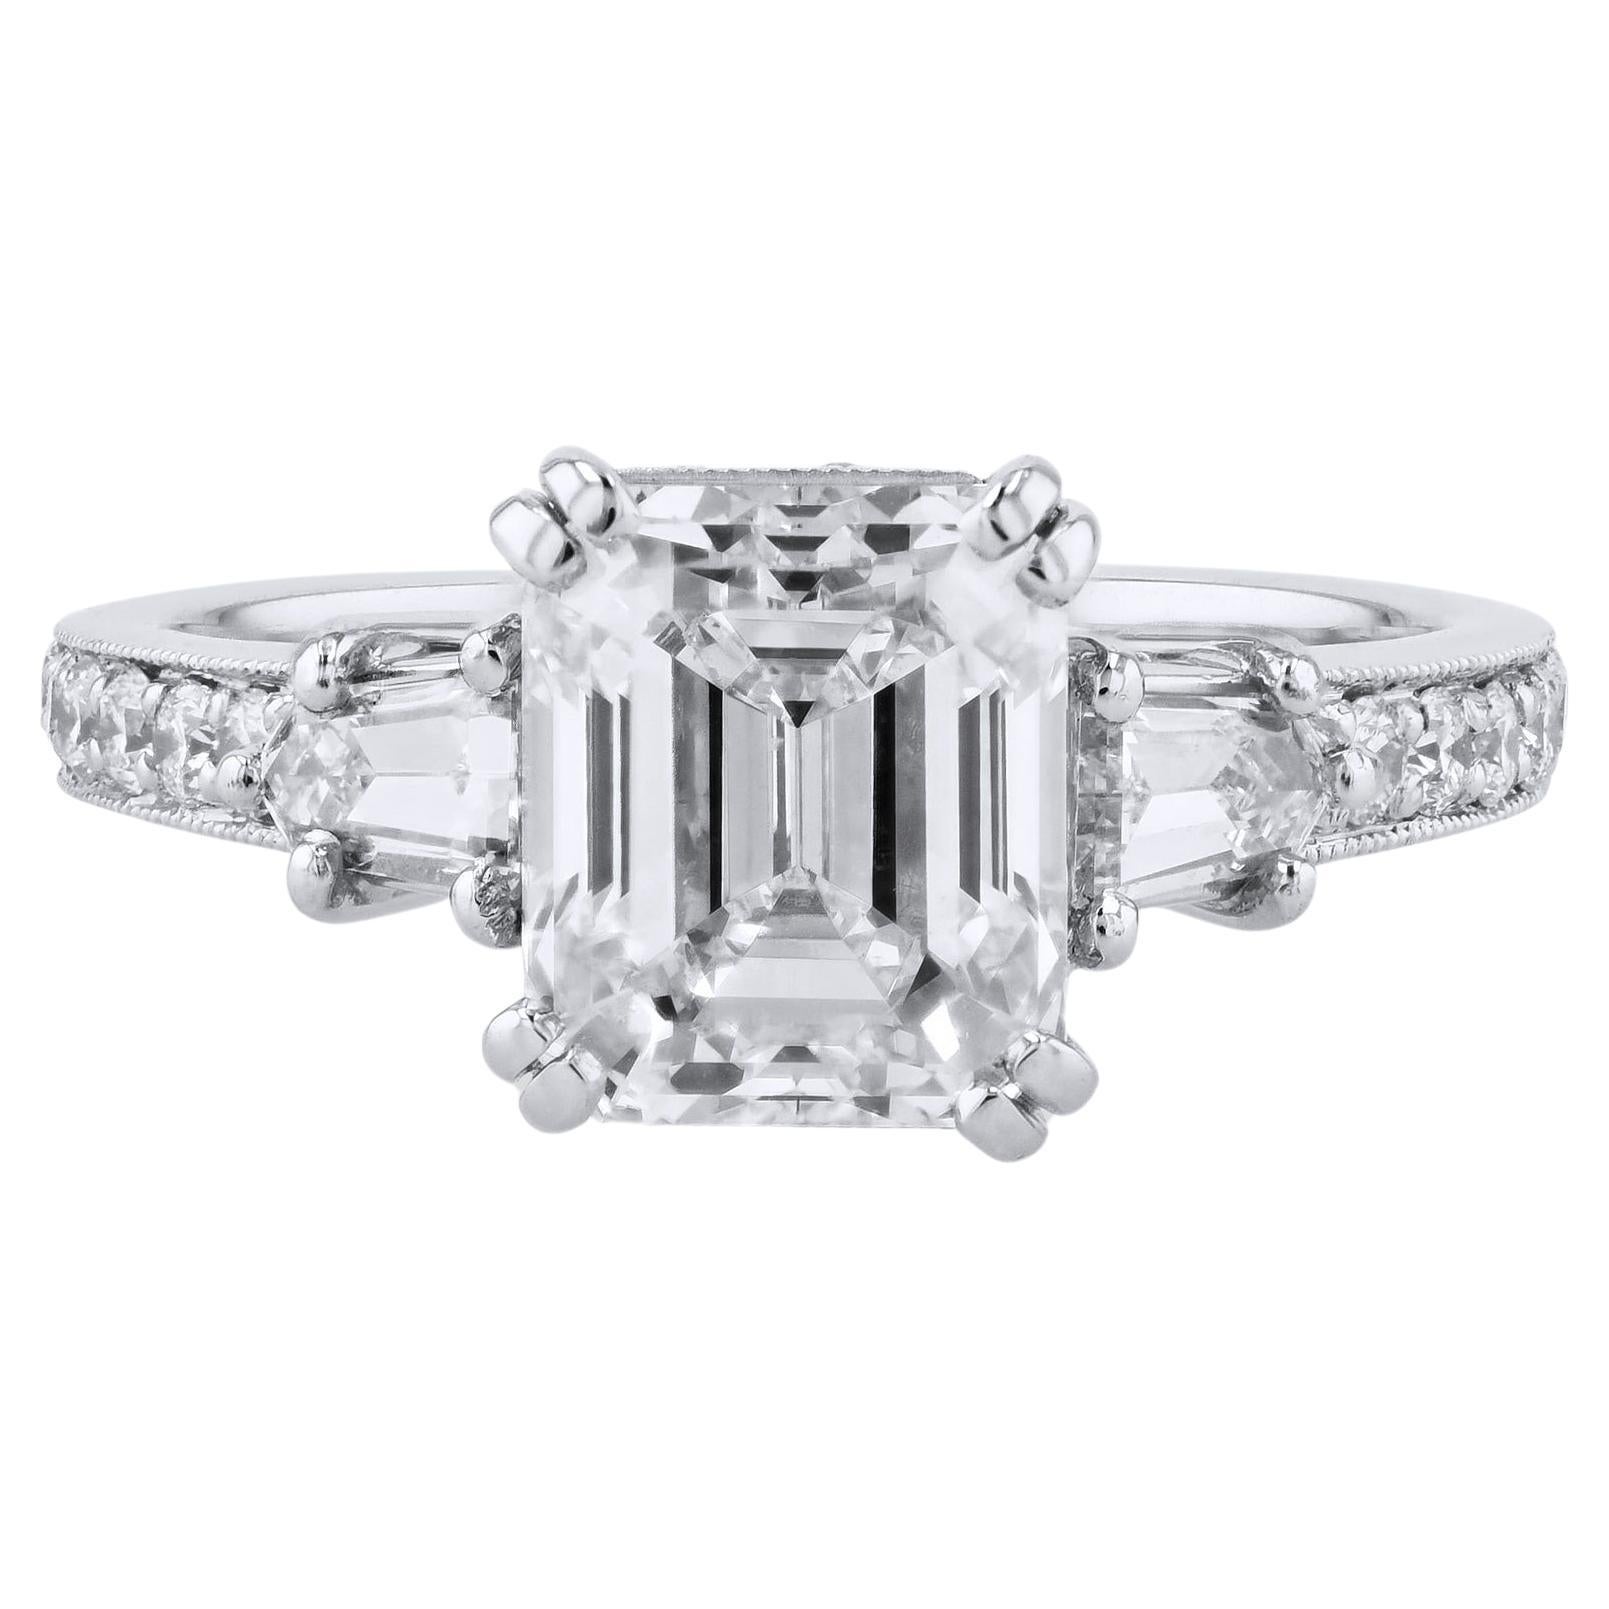 GIA Certified 3.02 Carat Emerald Cut Diamond Platinum Engagement Ring